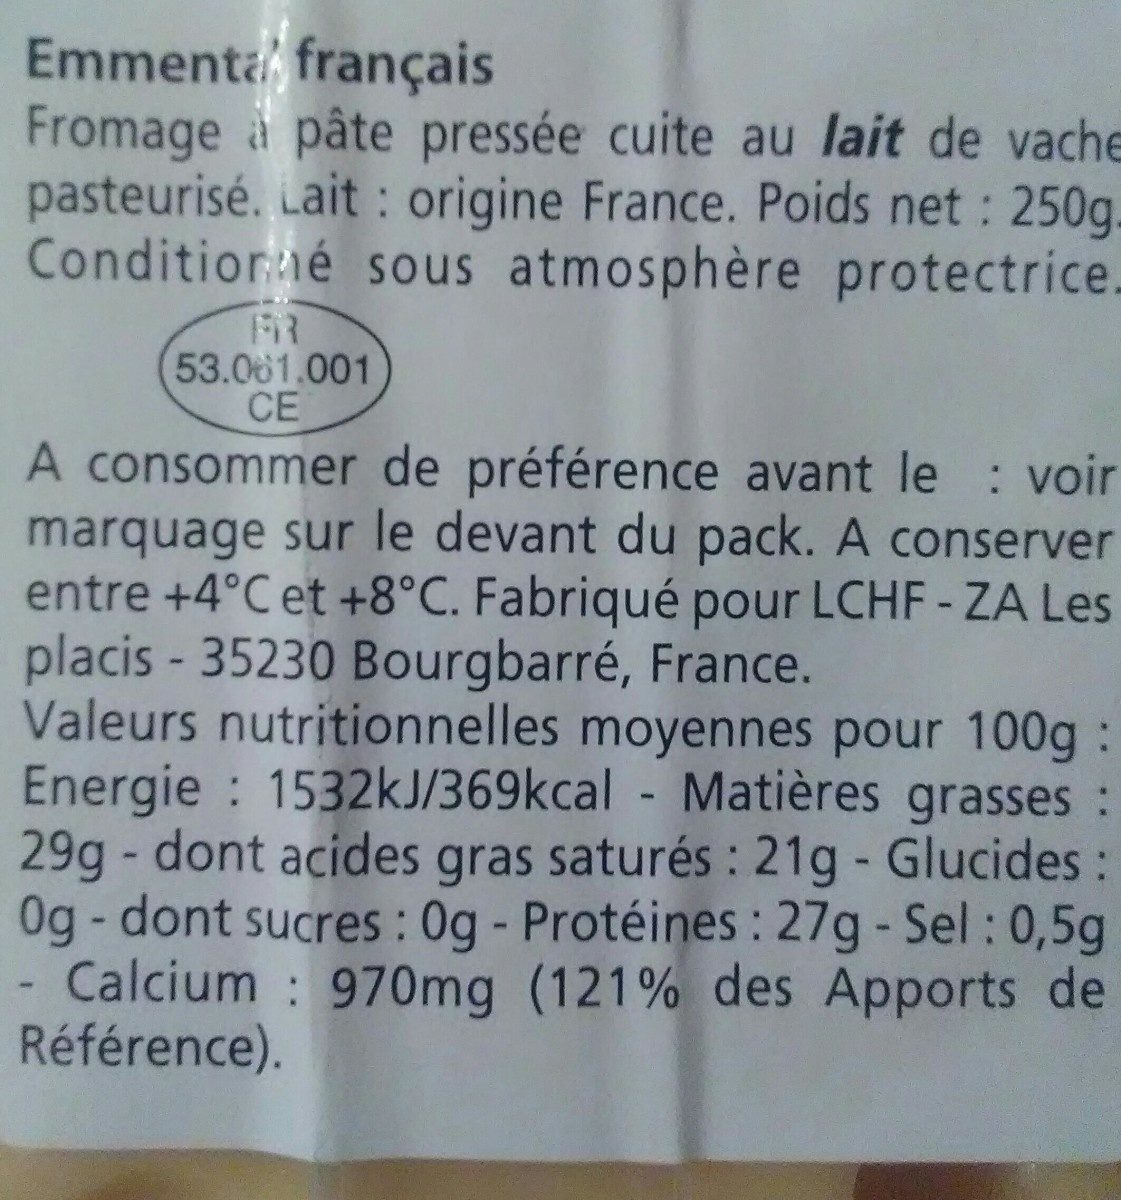 Emmental francais - Ingrediënten - fr